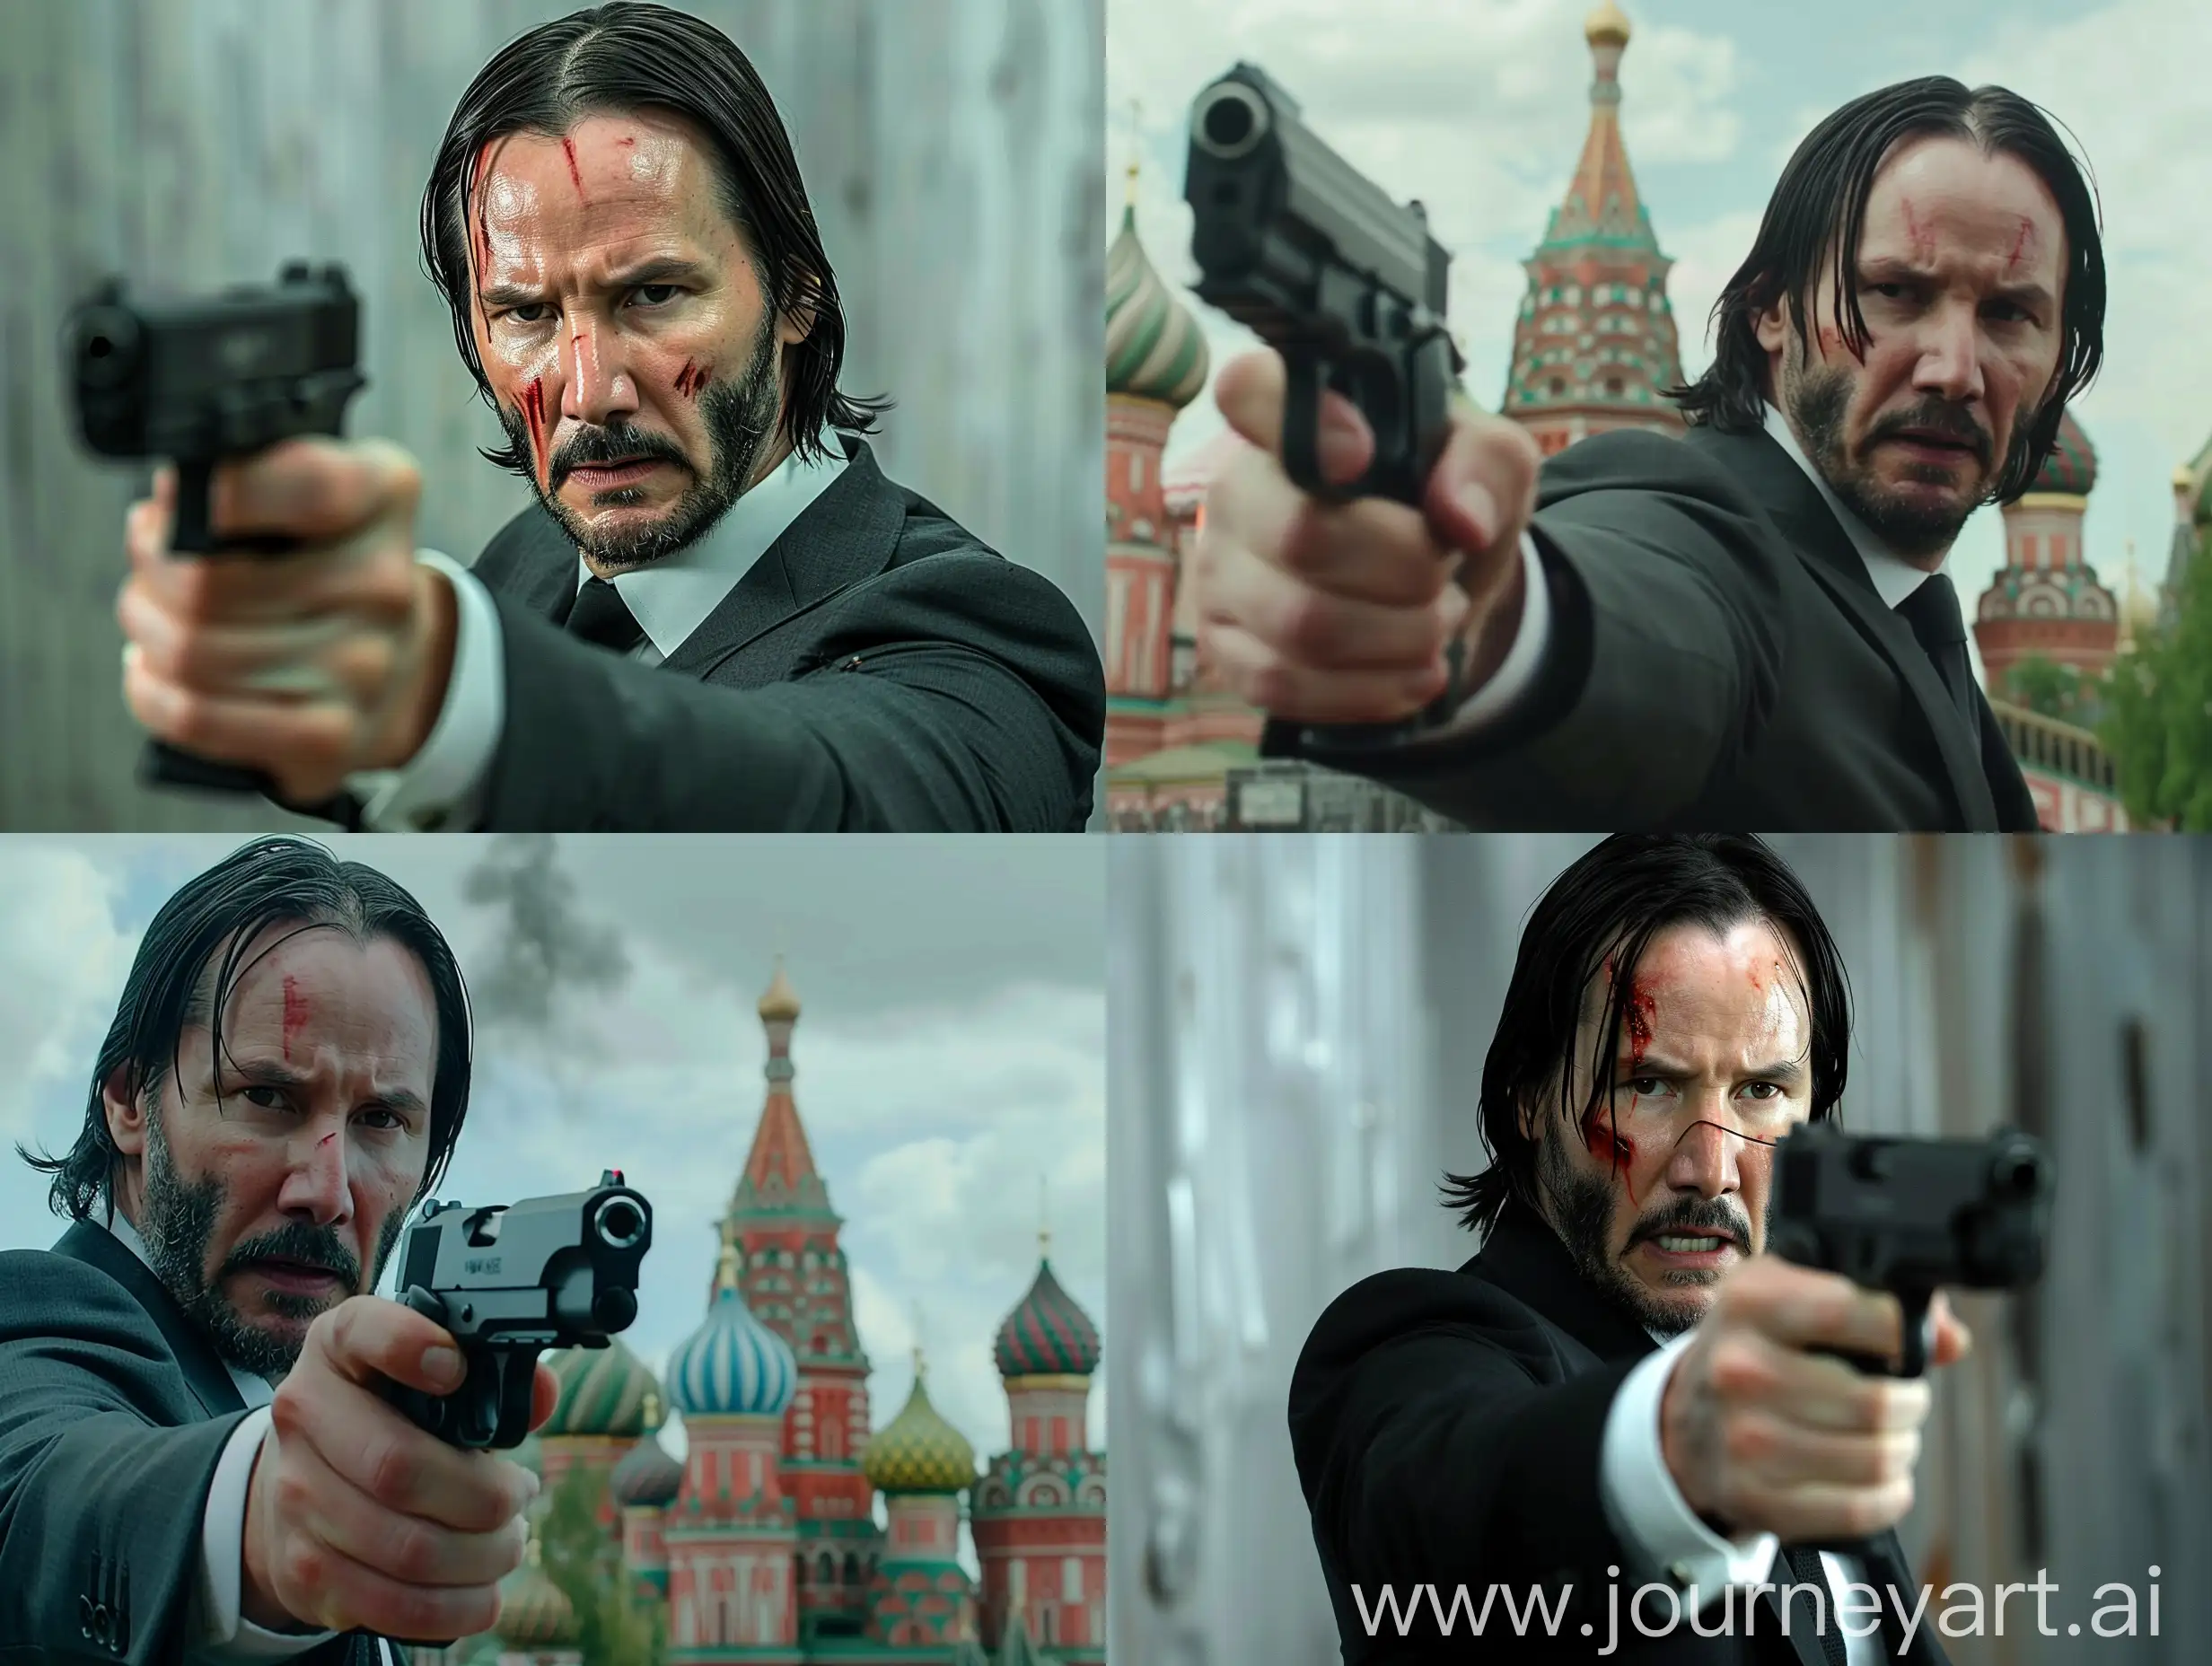 John Wick aims a gun at Vladimir Putin